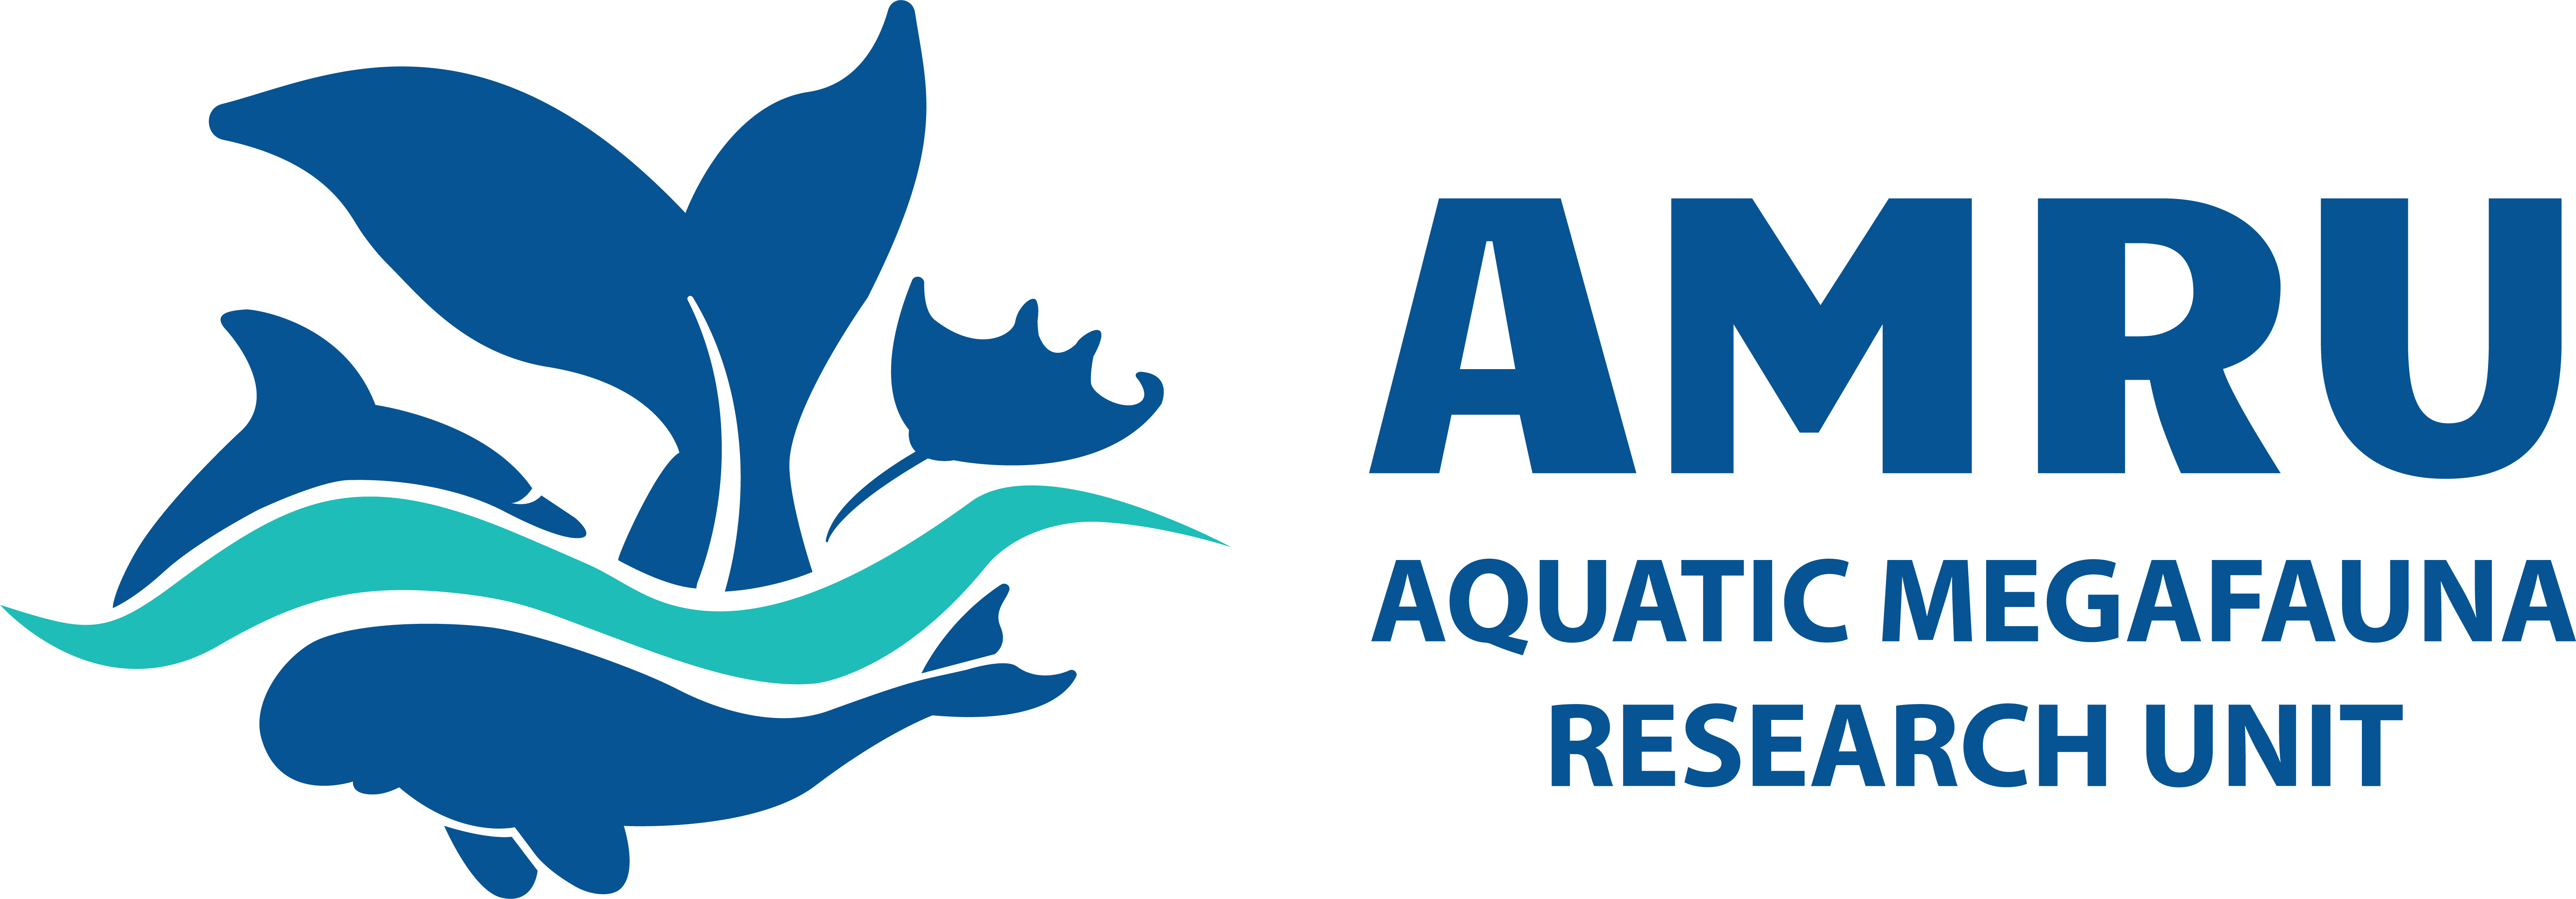 Dugong Logo - Aquatic Megafauna Research Unit | Google Impact Challenge Australia ...